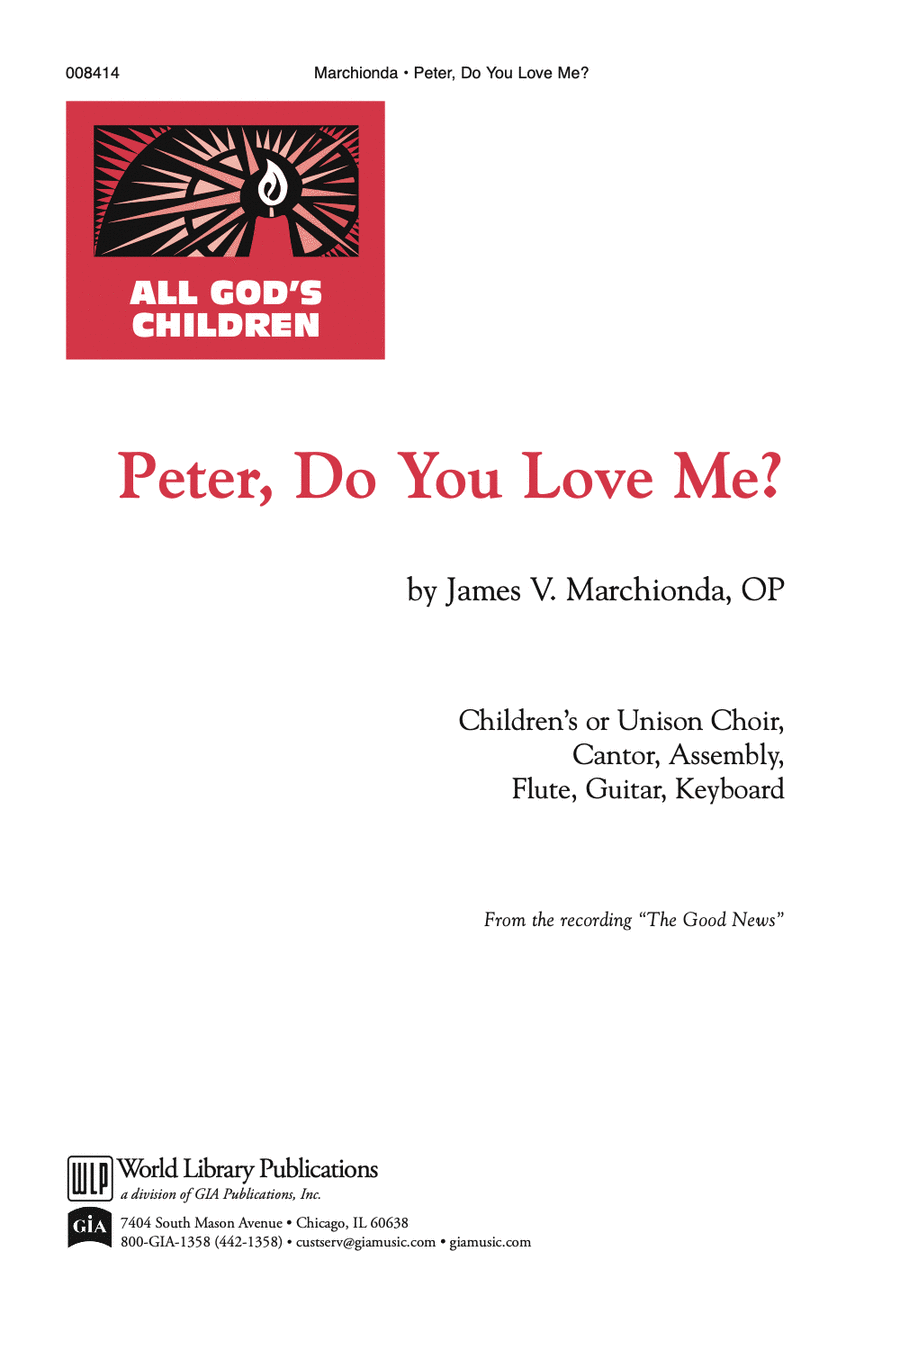 Peter Do You Love Me?